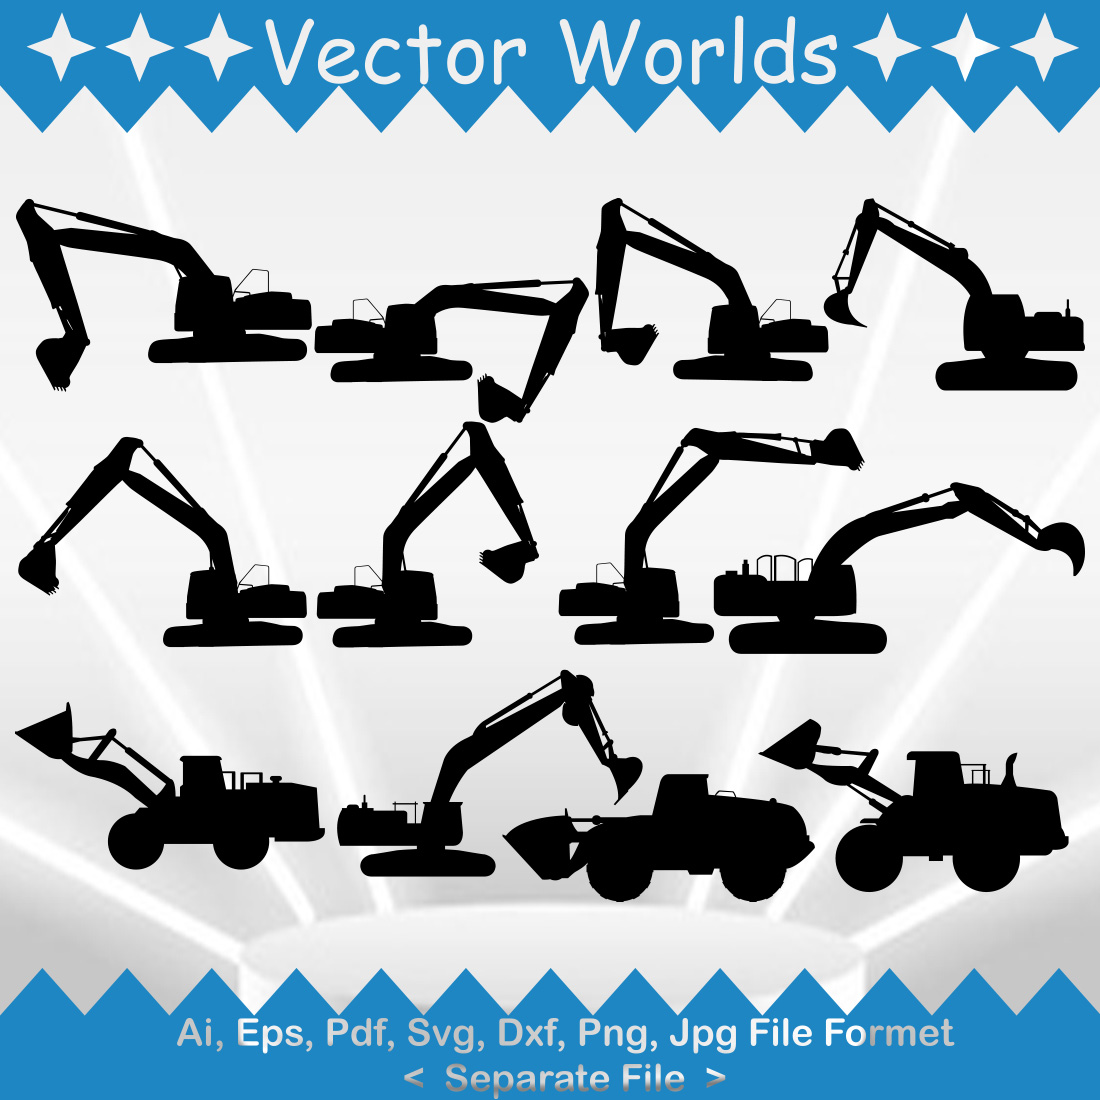 Crane SVG Vector Design cover image.